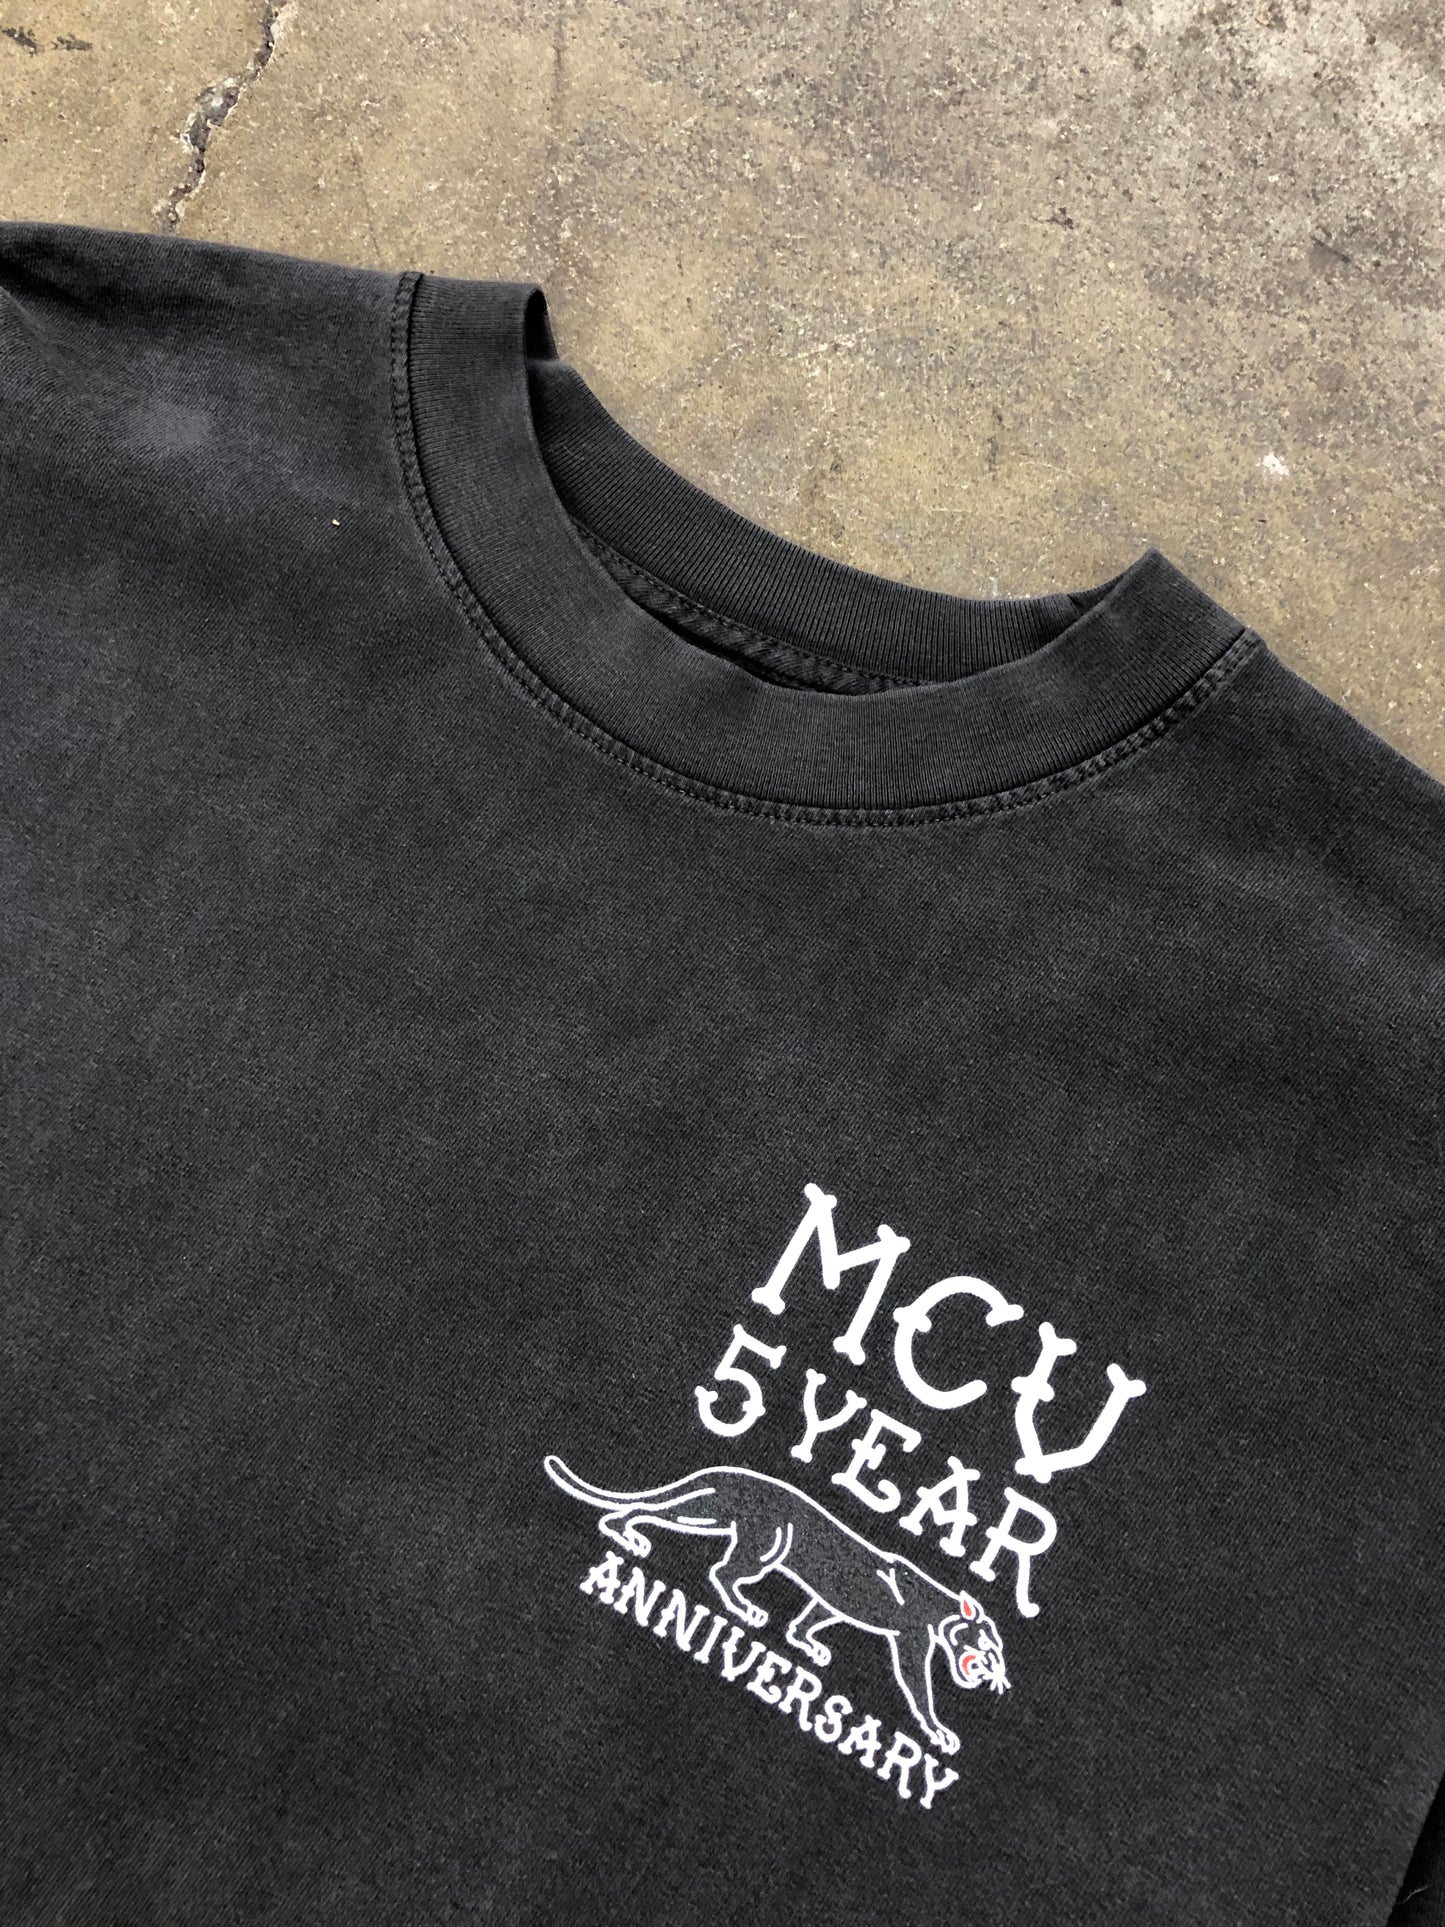 MCV 5 Year Panther Longsleeve T-Shirt (Washed Black)